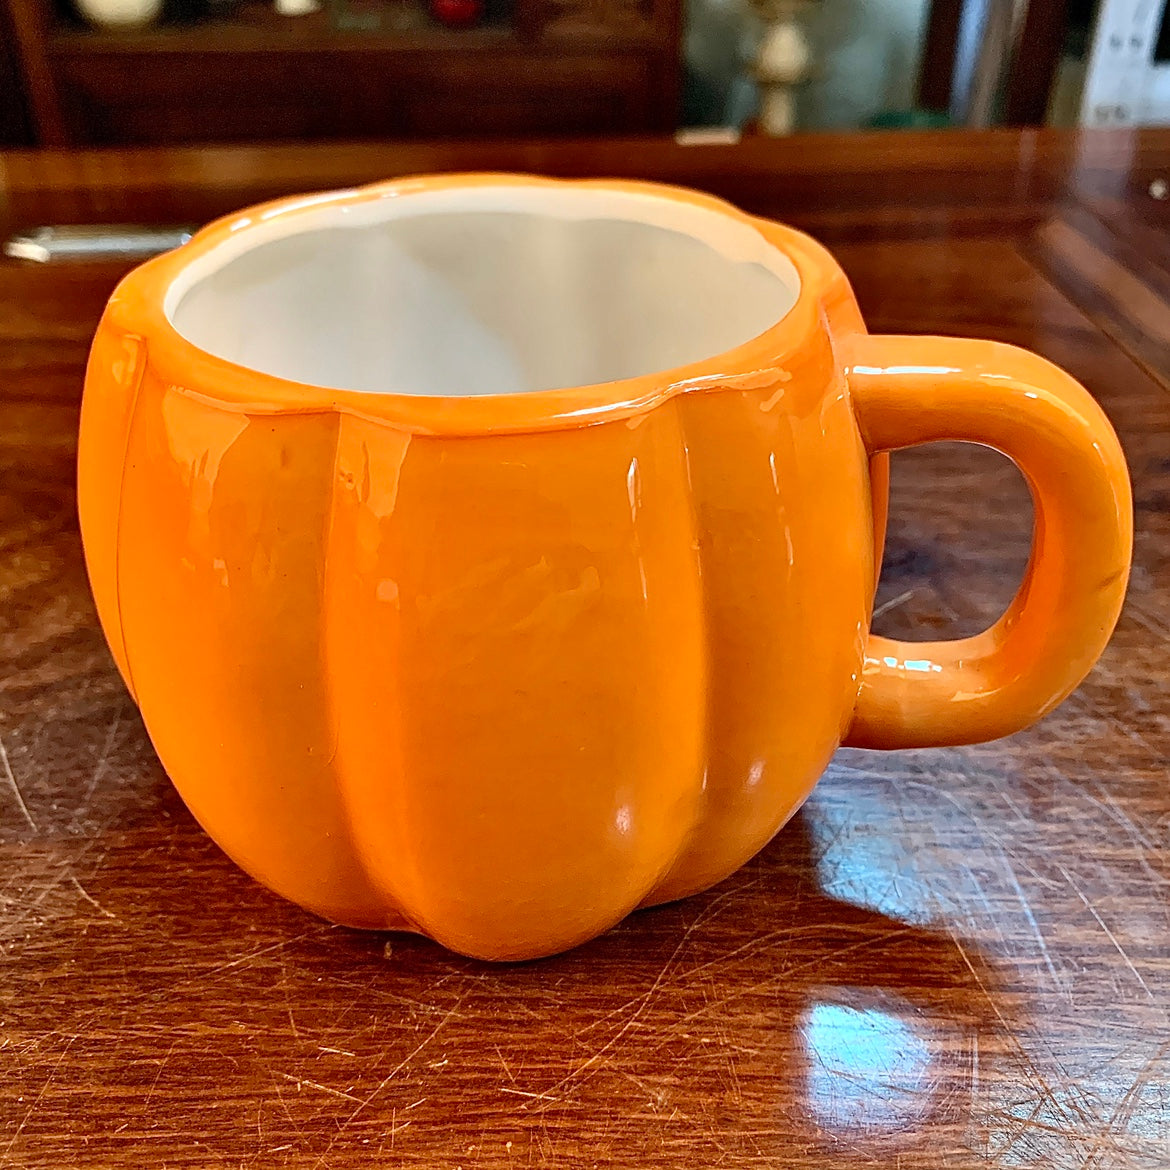 Ceramic Halloween Pumpkin Mug